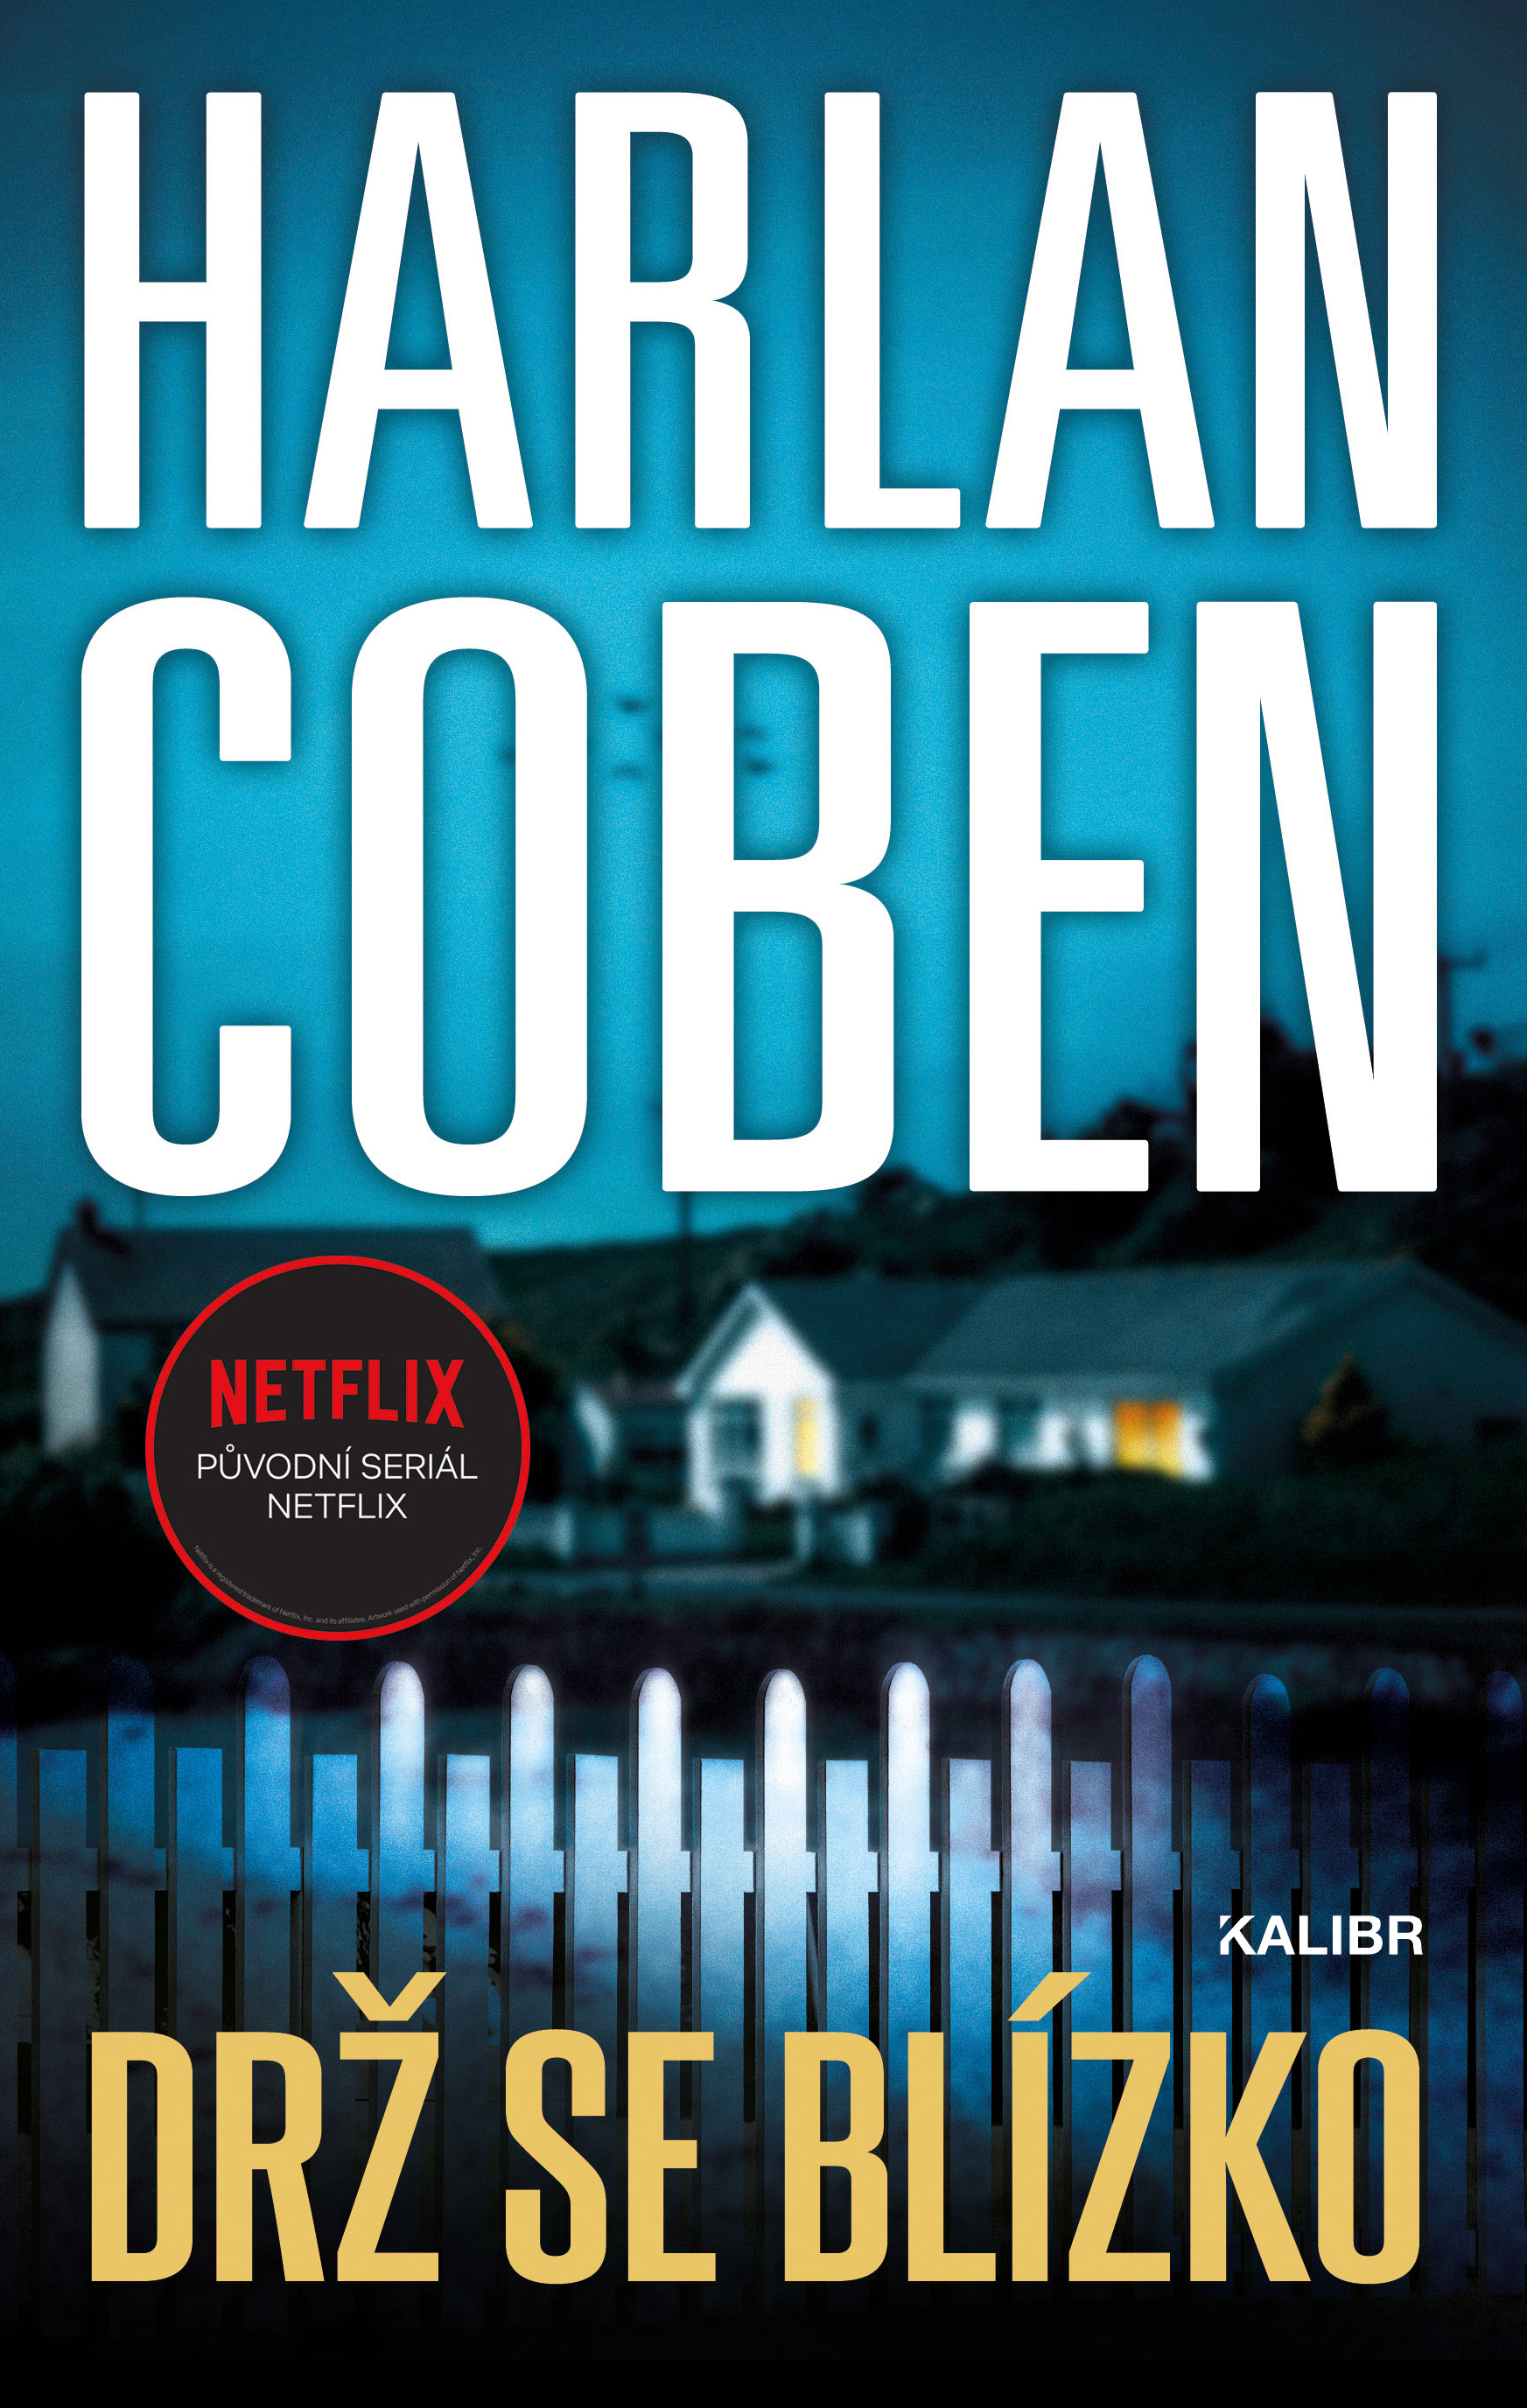 E-kniha Drž se blízko - Harlan Coben